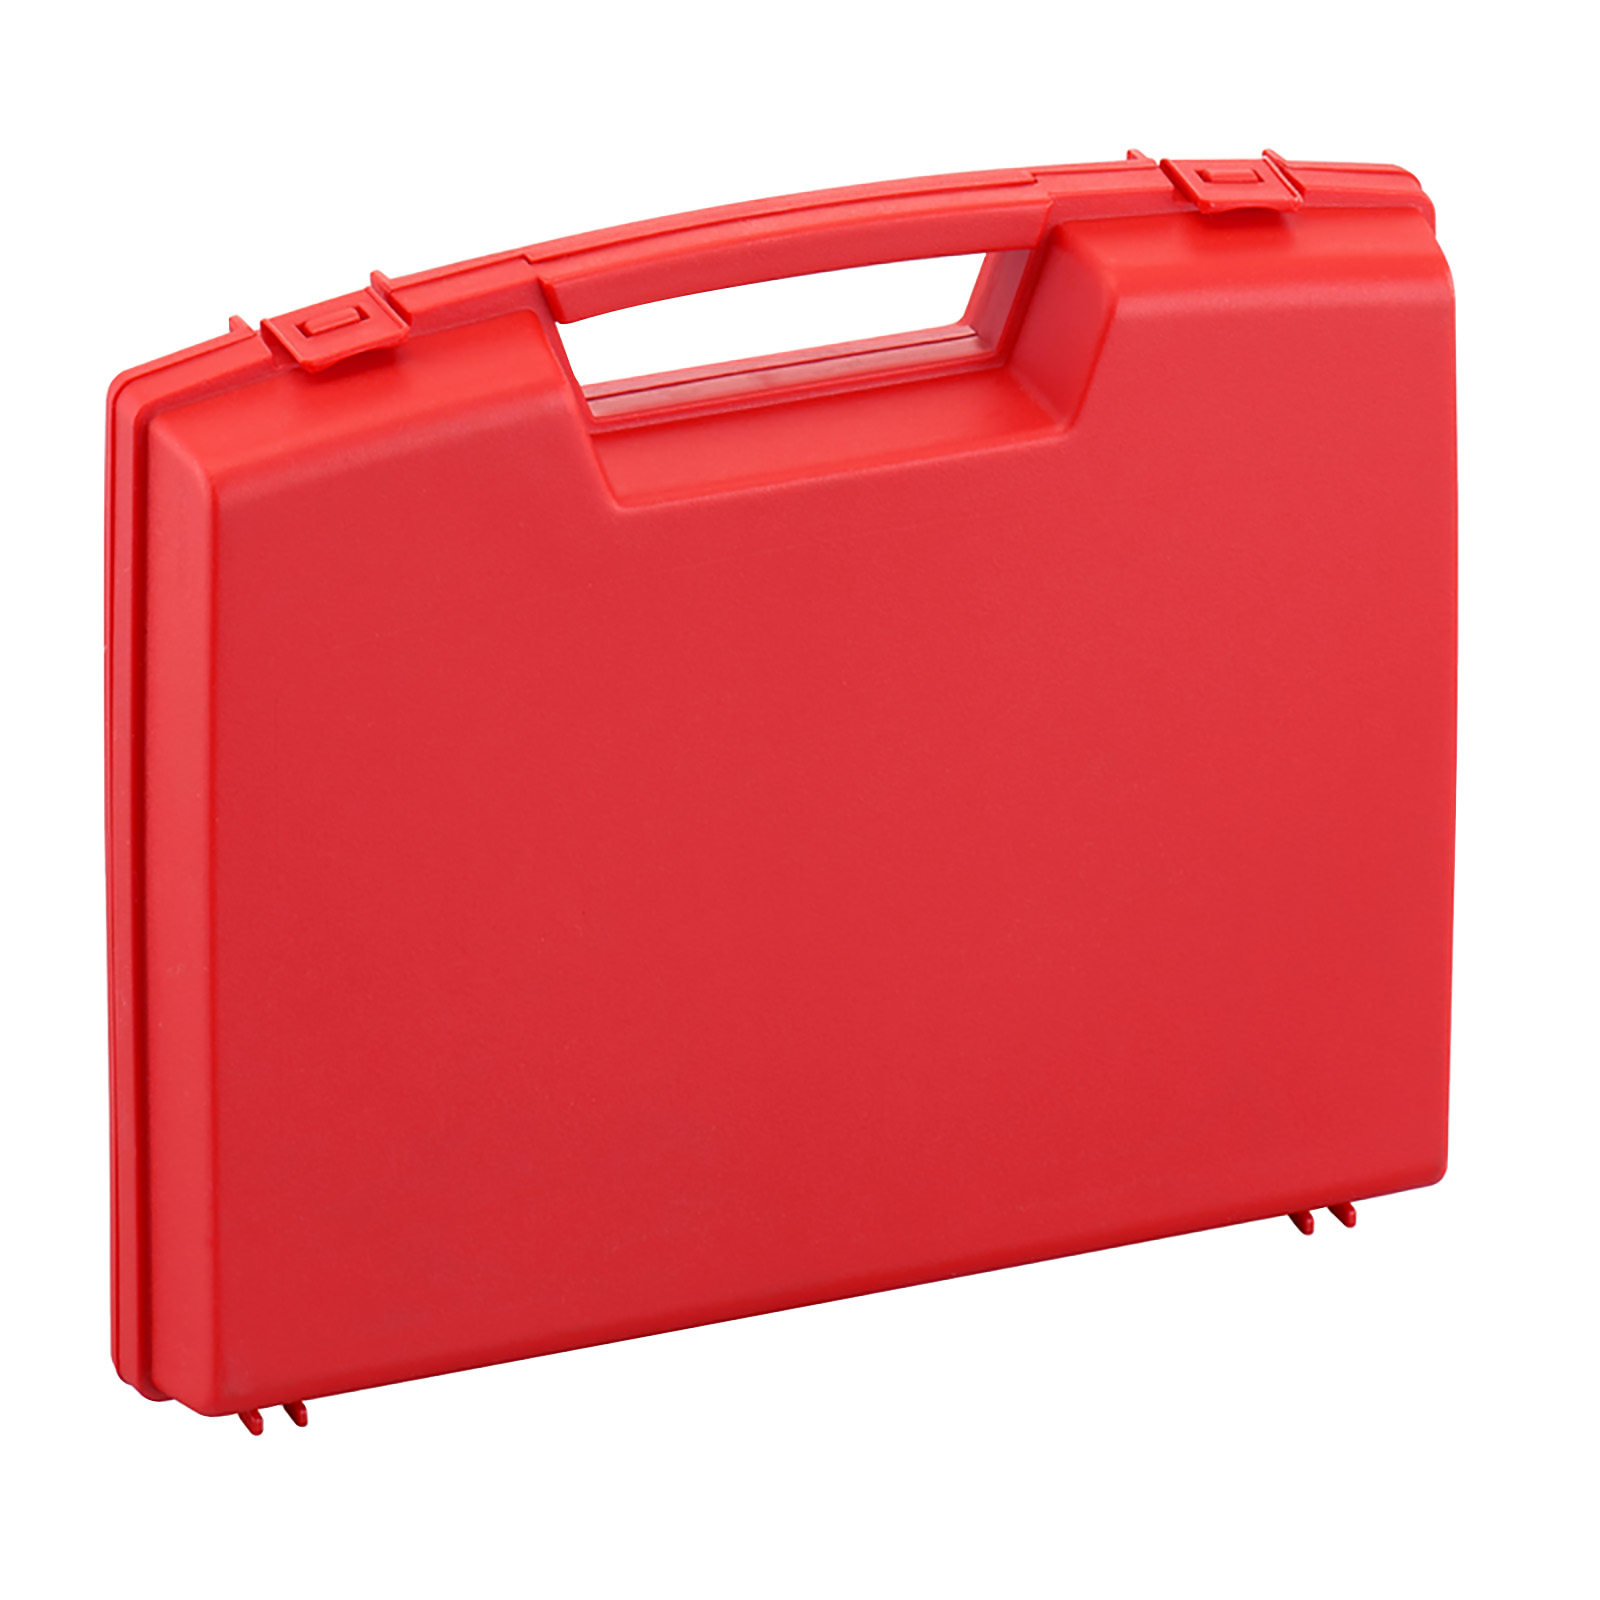 valigetta in plastica rossa